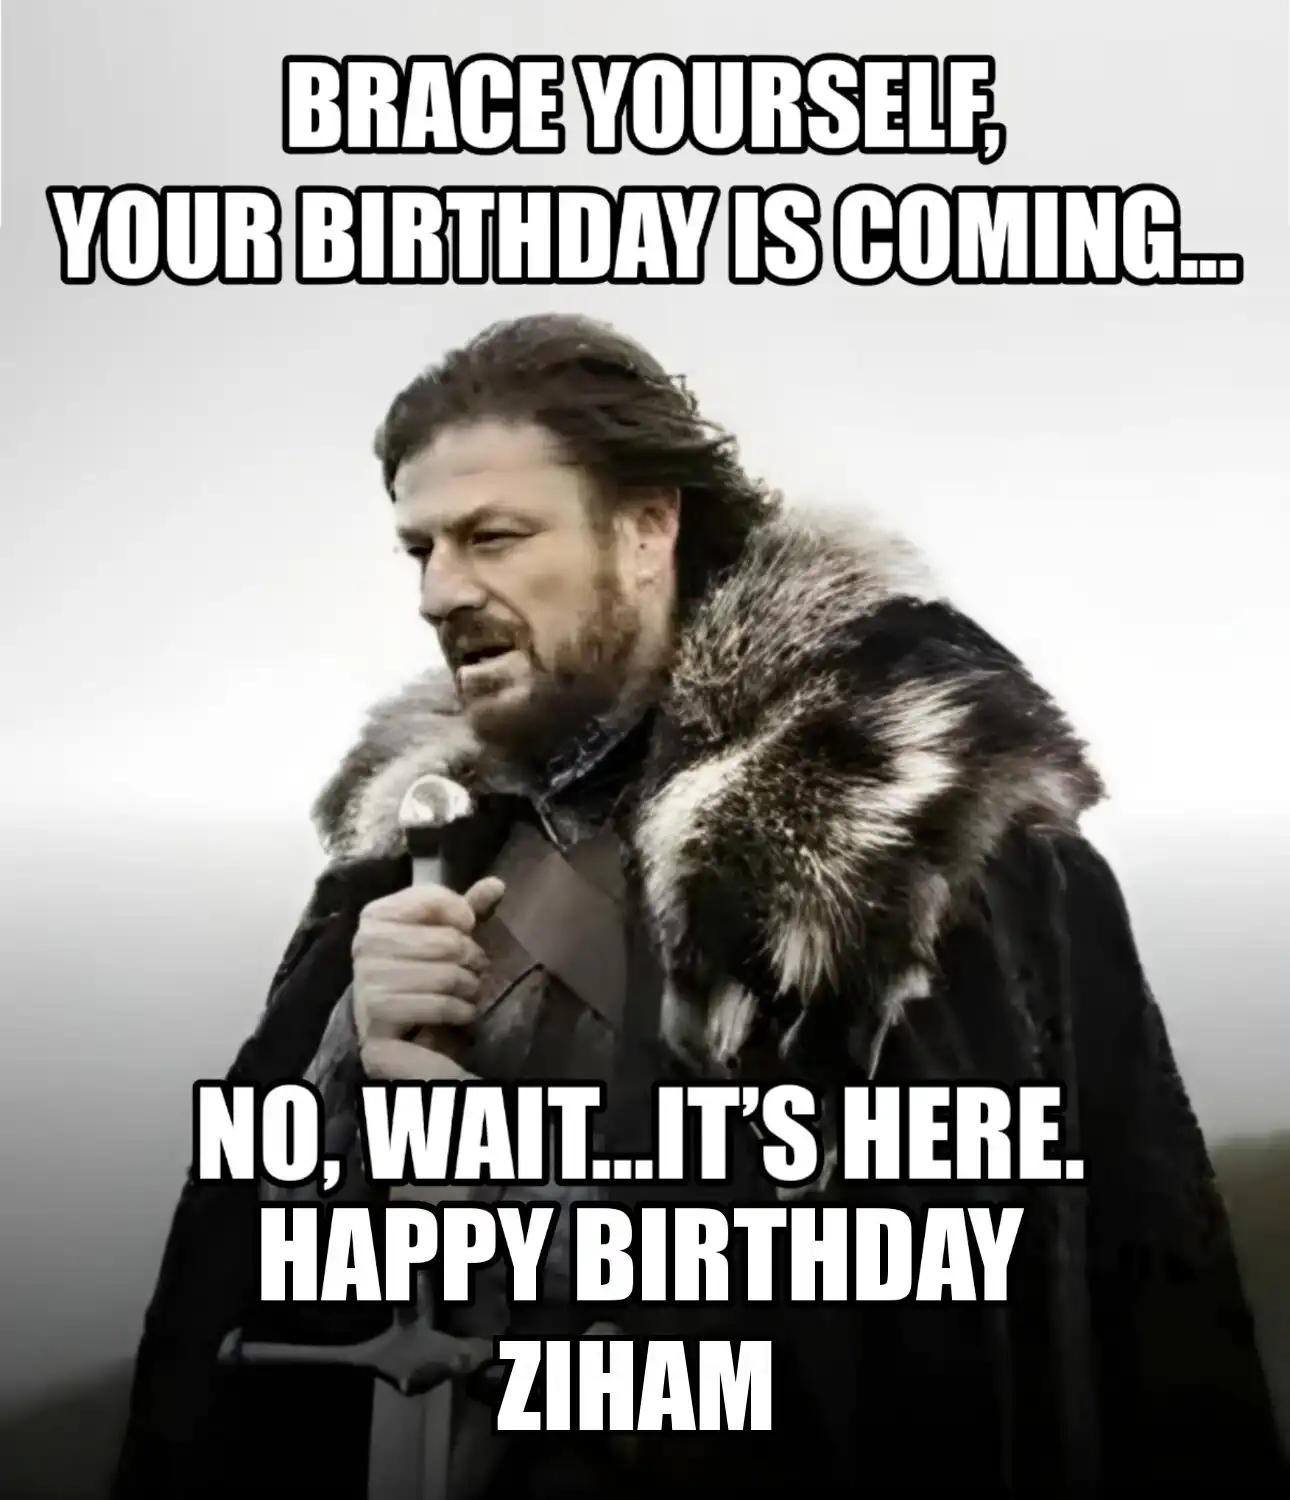 Happy Birthday Ziham Brace Yourself Your Birthday Is Coming Meme